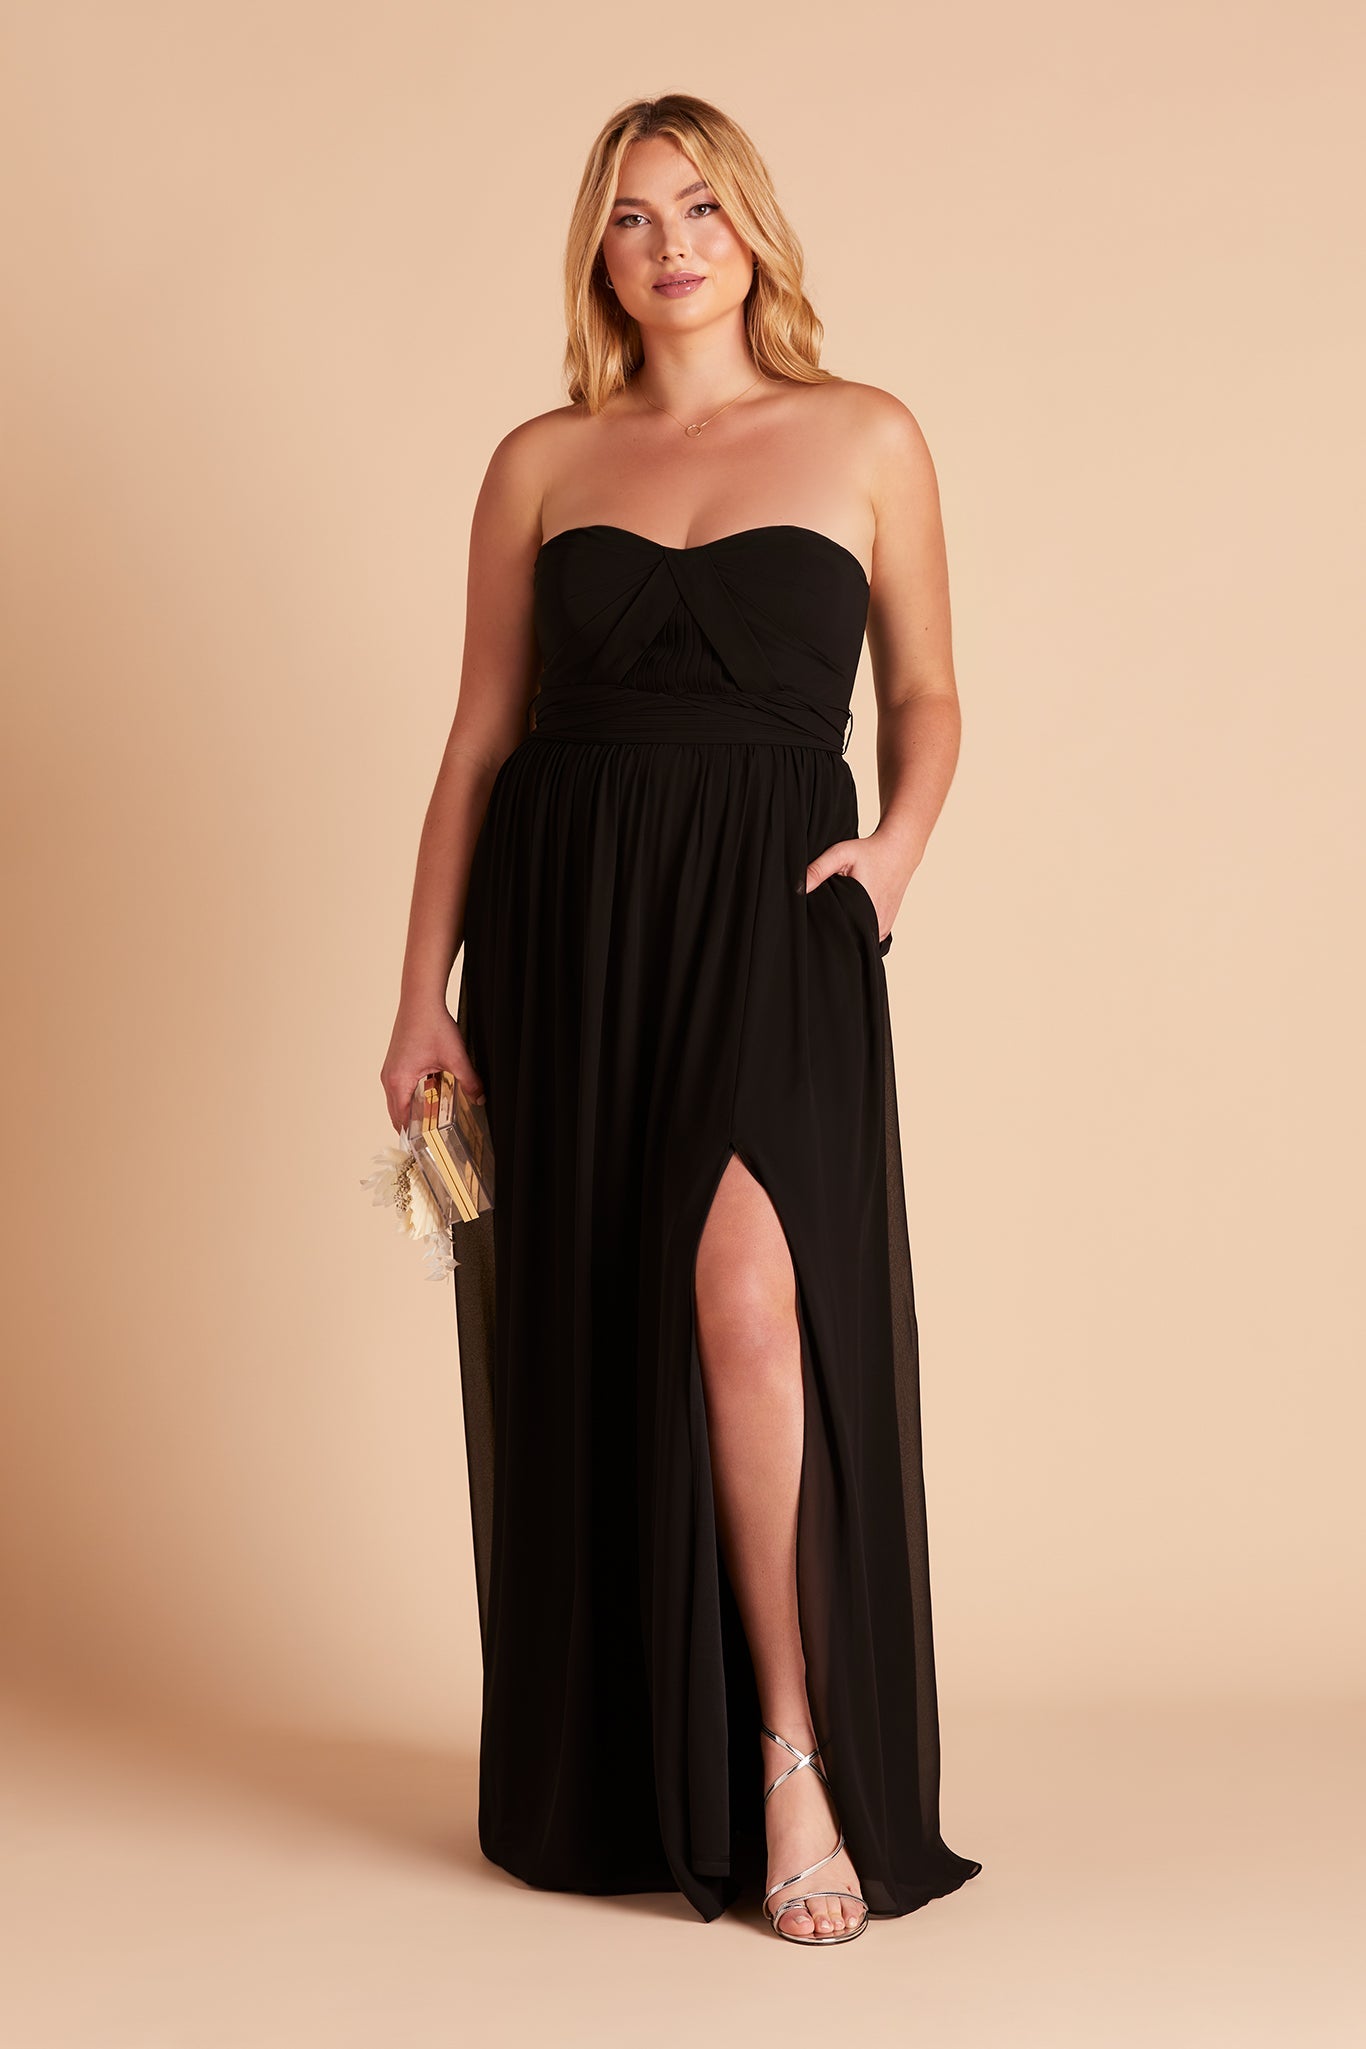 Grace Convertible Chiffon Bridesmaid Dress in Black